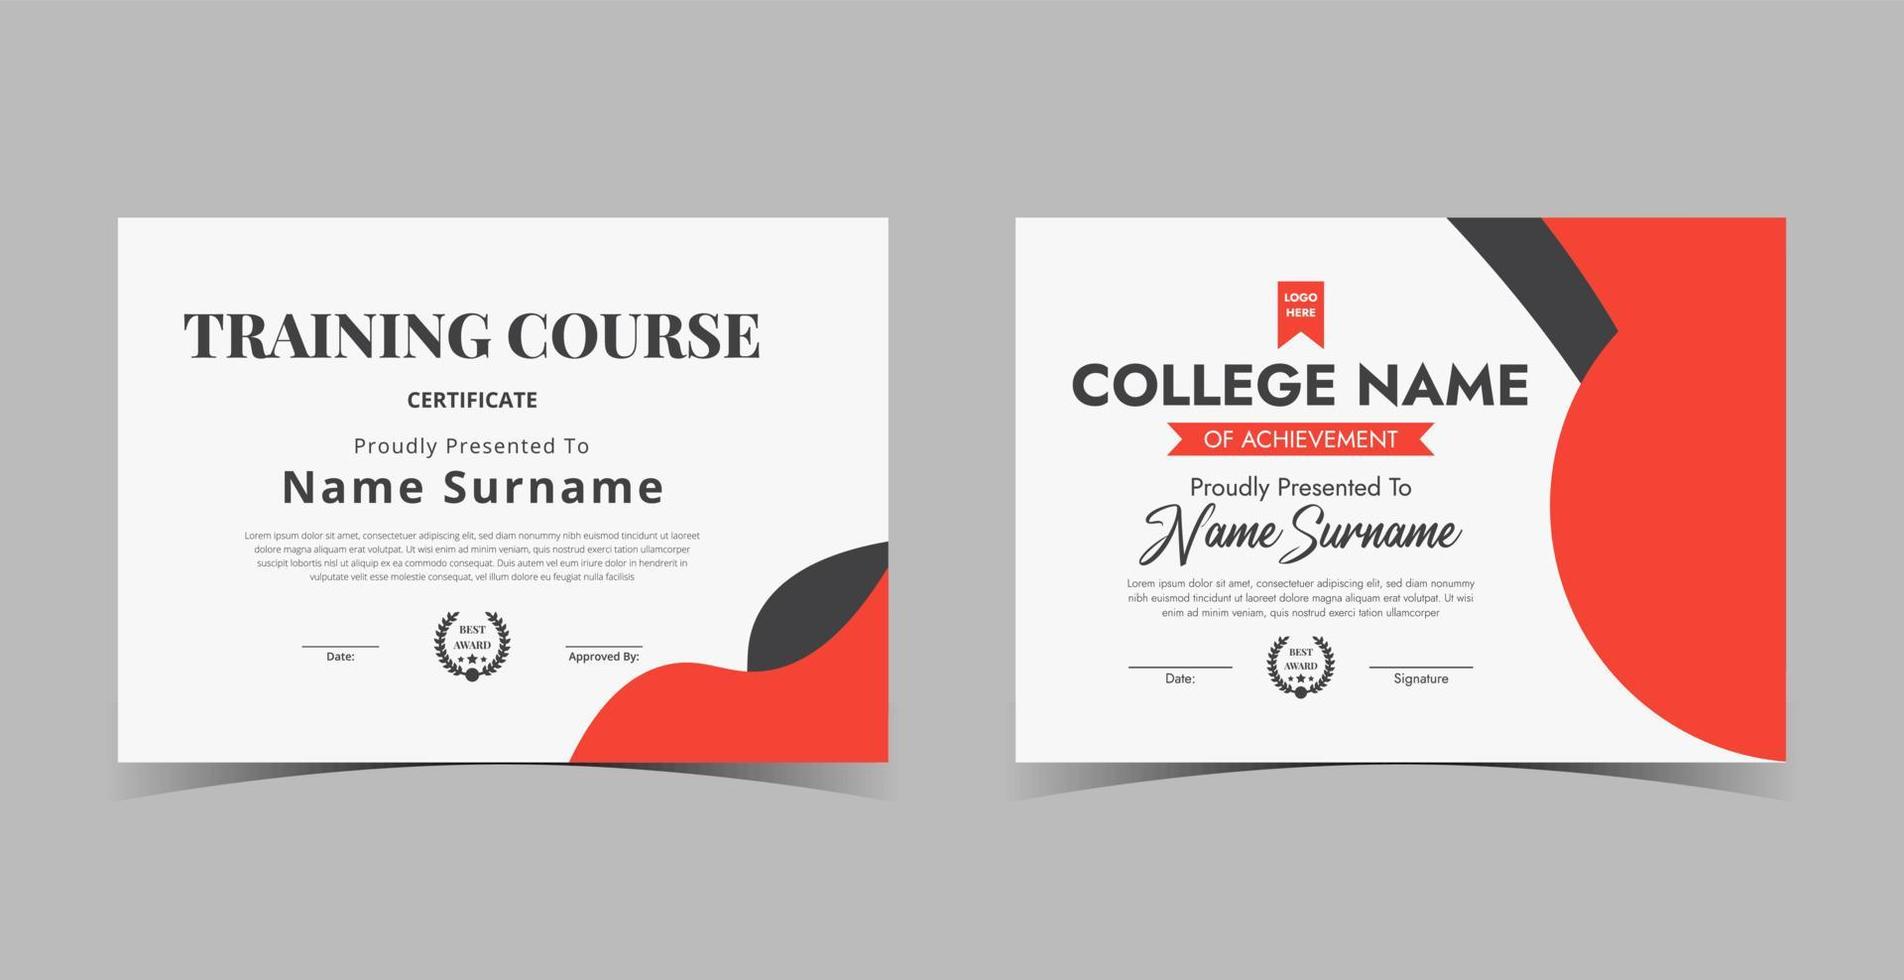 Professional diploma certificate template,Certificate of Appreciation template, certificate of achievement, awards diploma template vector